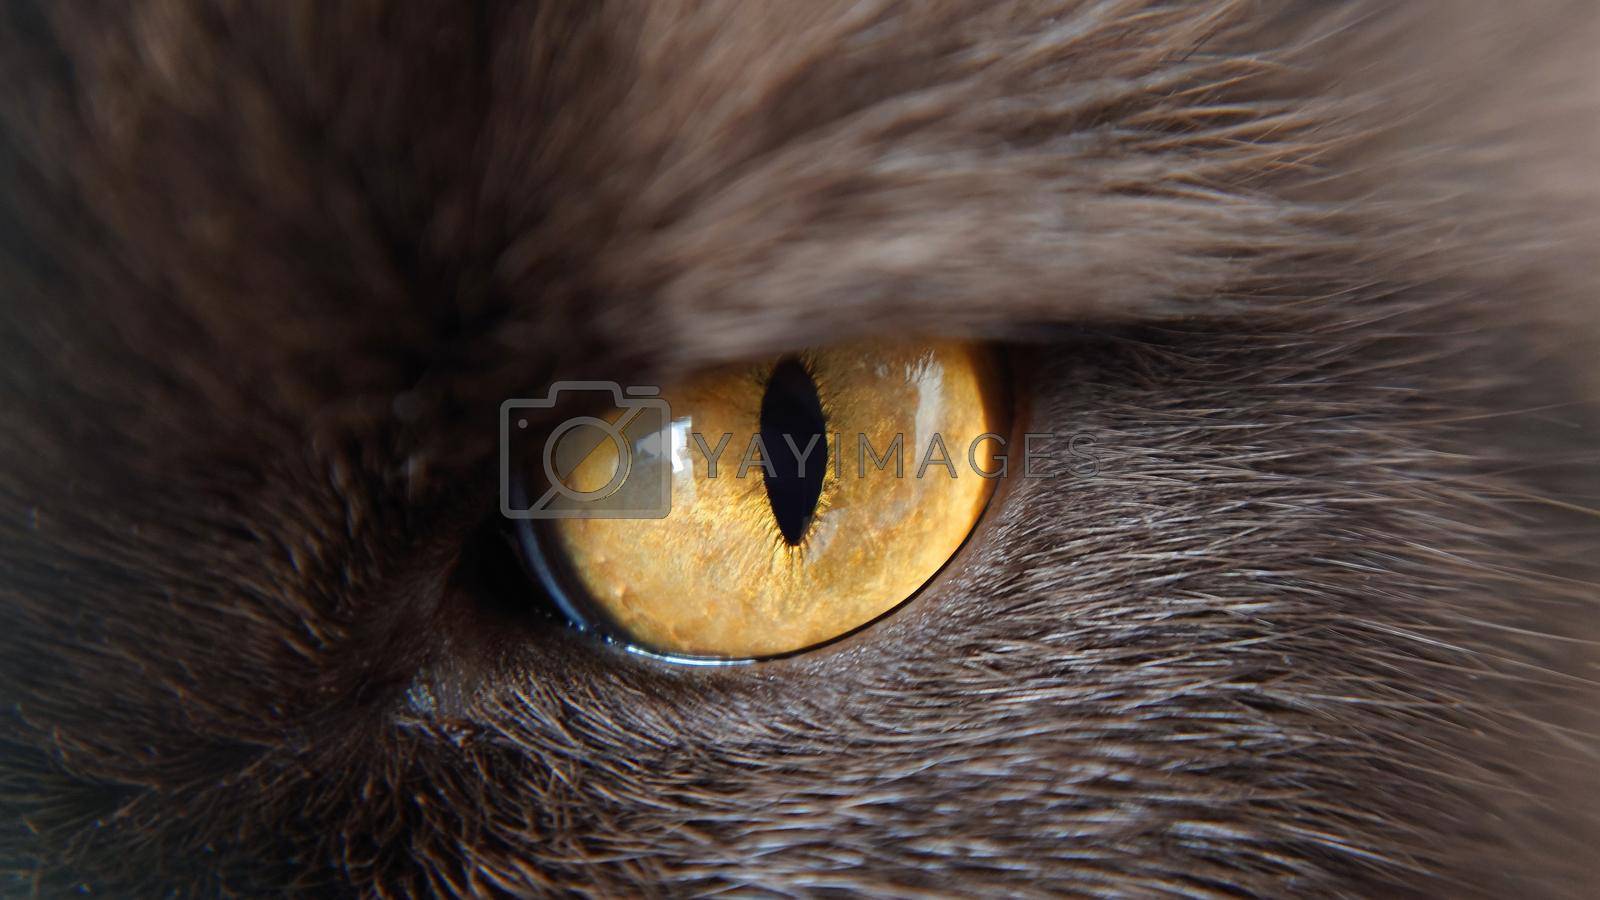 Royalty free image of Macro yellow eyes of the British cat breed by Mastak80